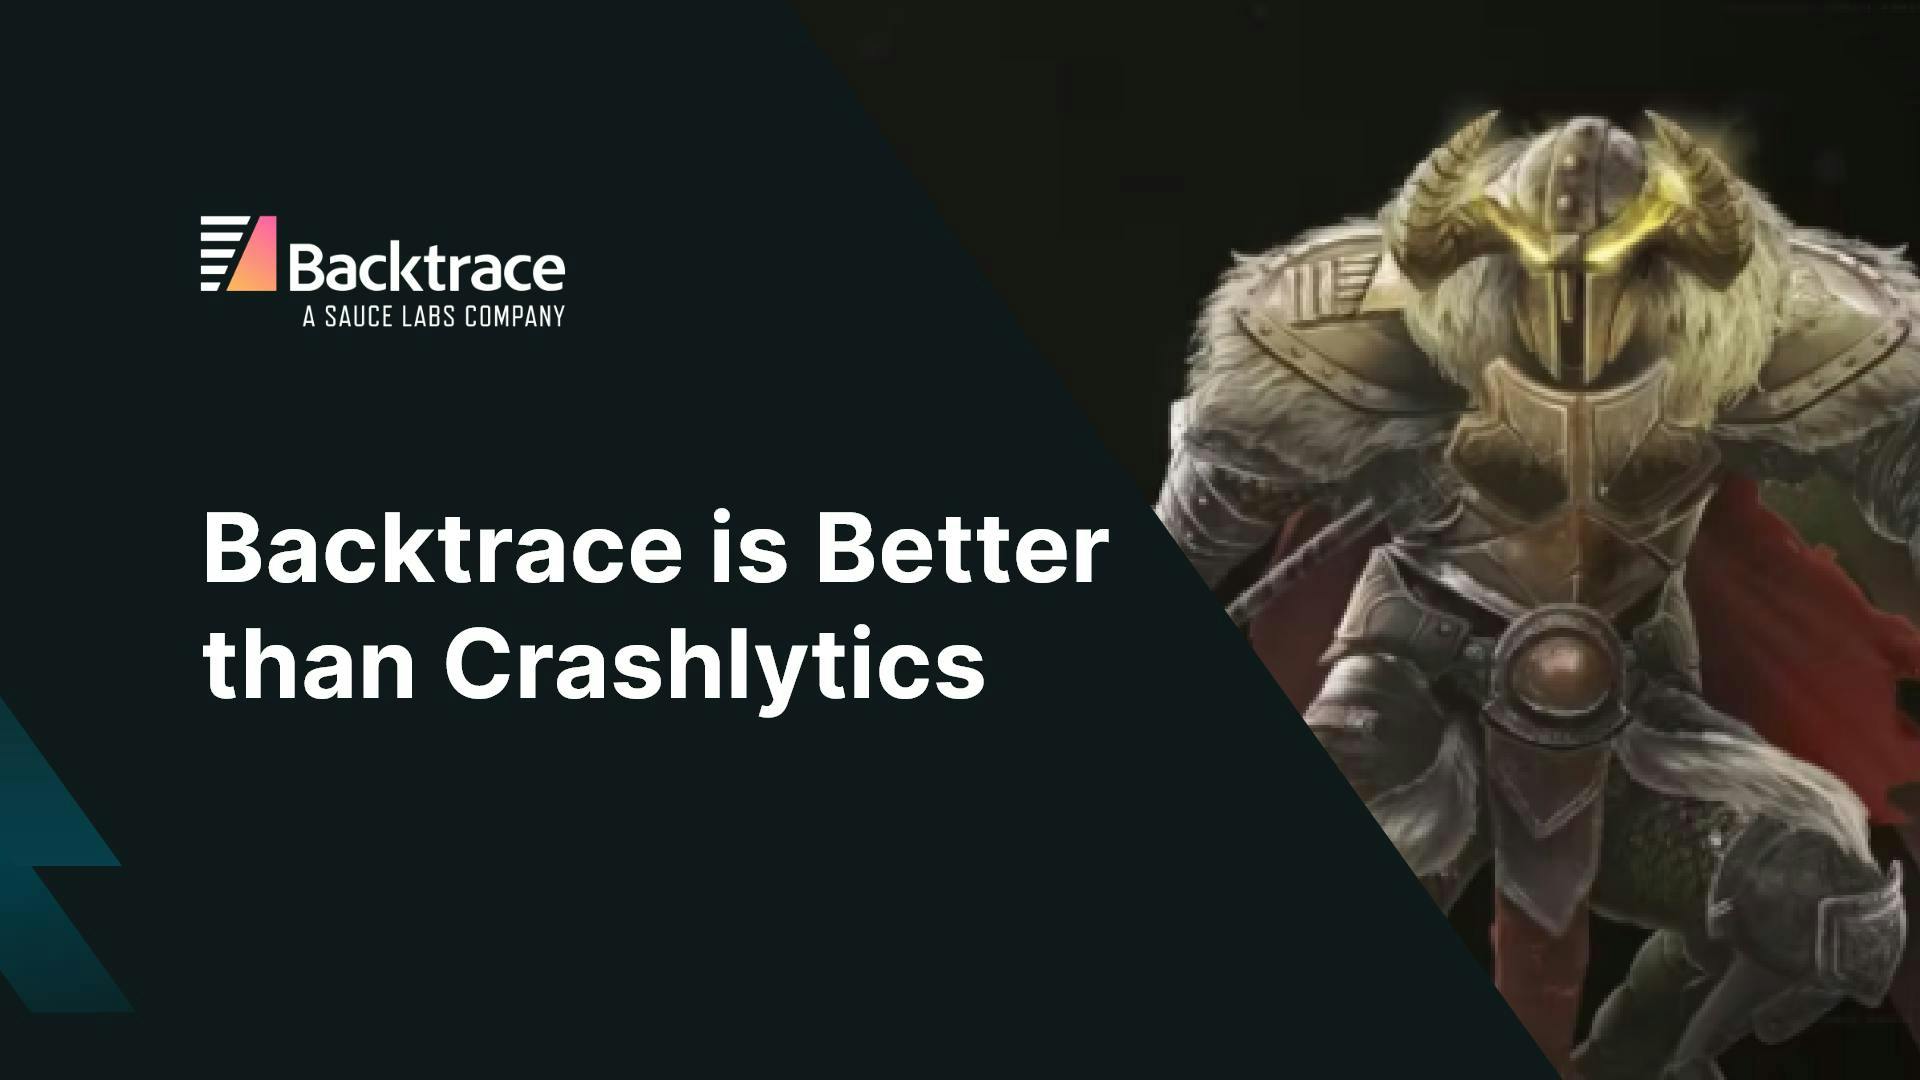 Backtrace is Better than Crashlytics.